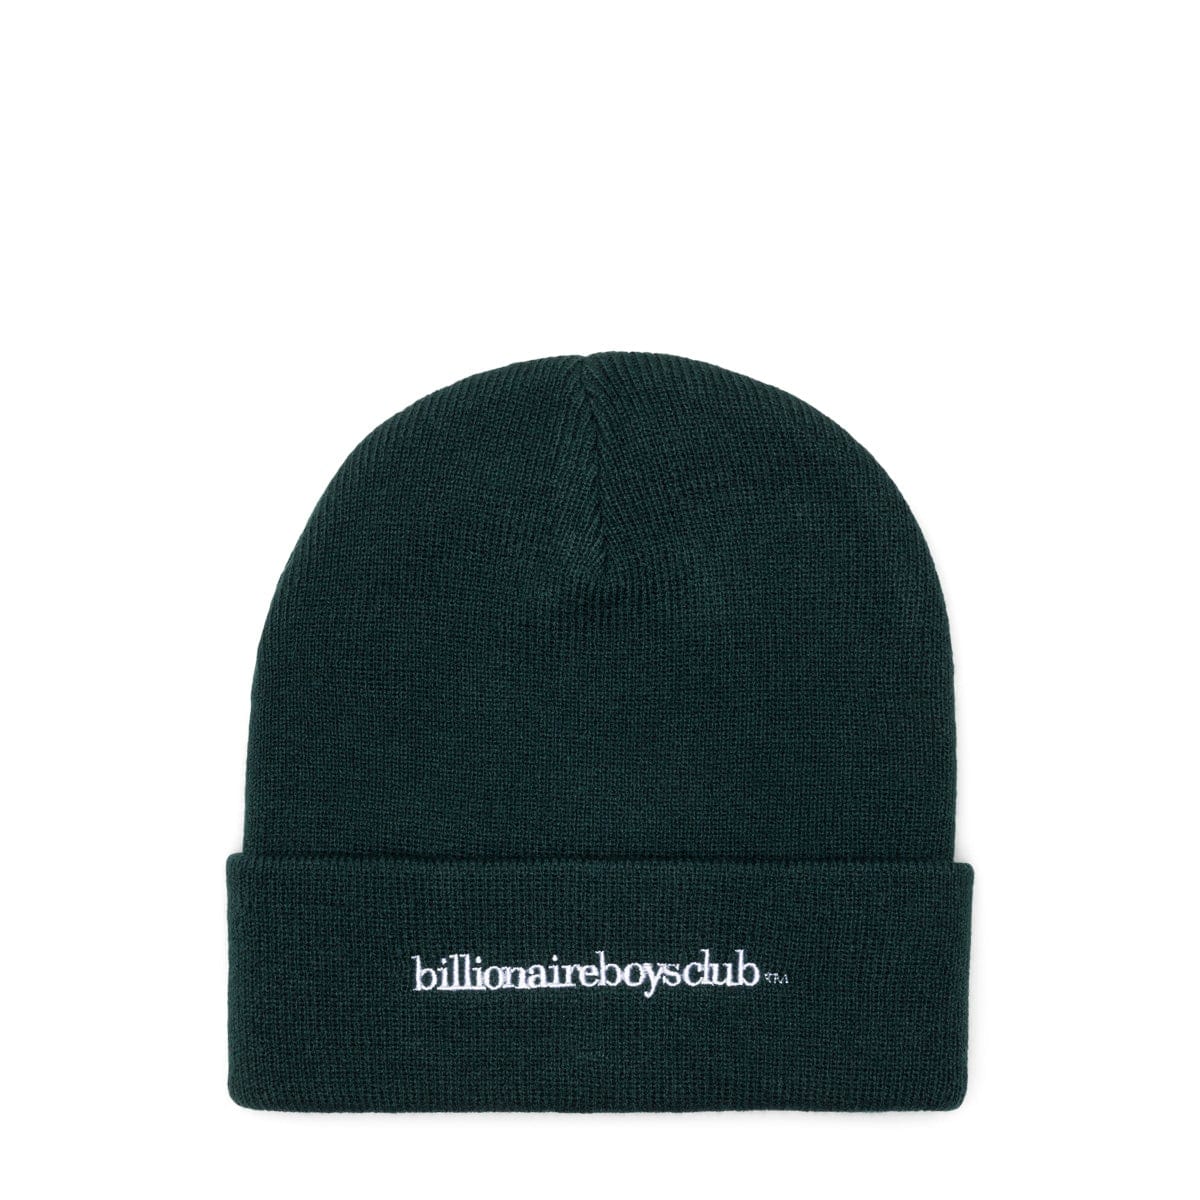 Billionaire Boys Club Headwear BOTANICAL GARDEN / O/S NEBULA HAT